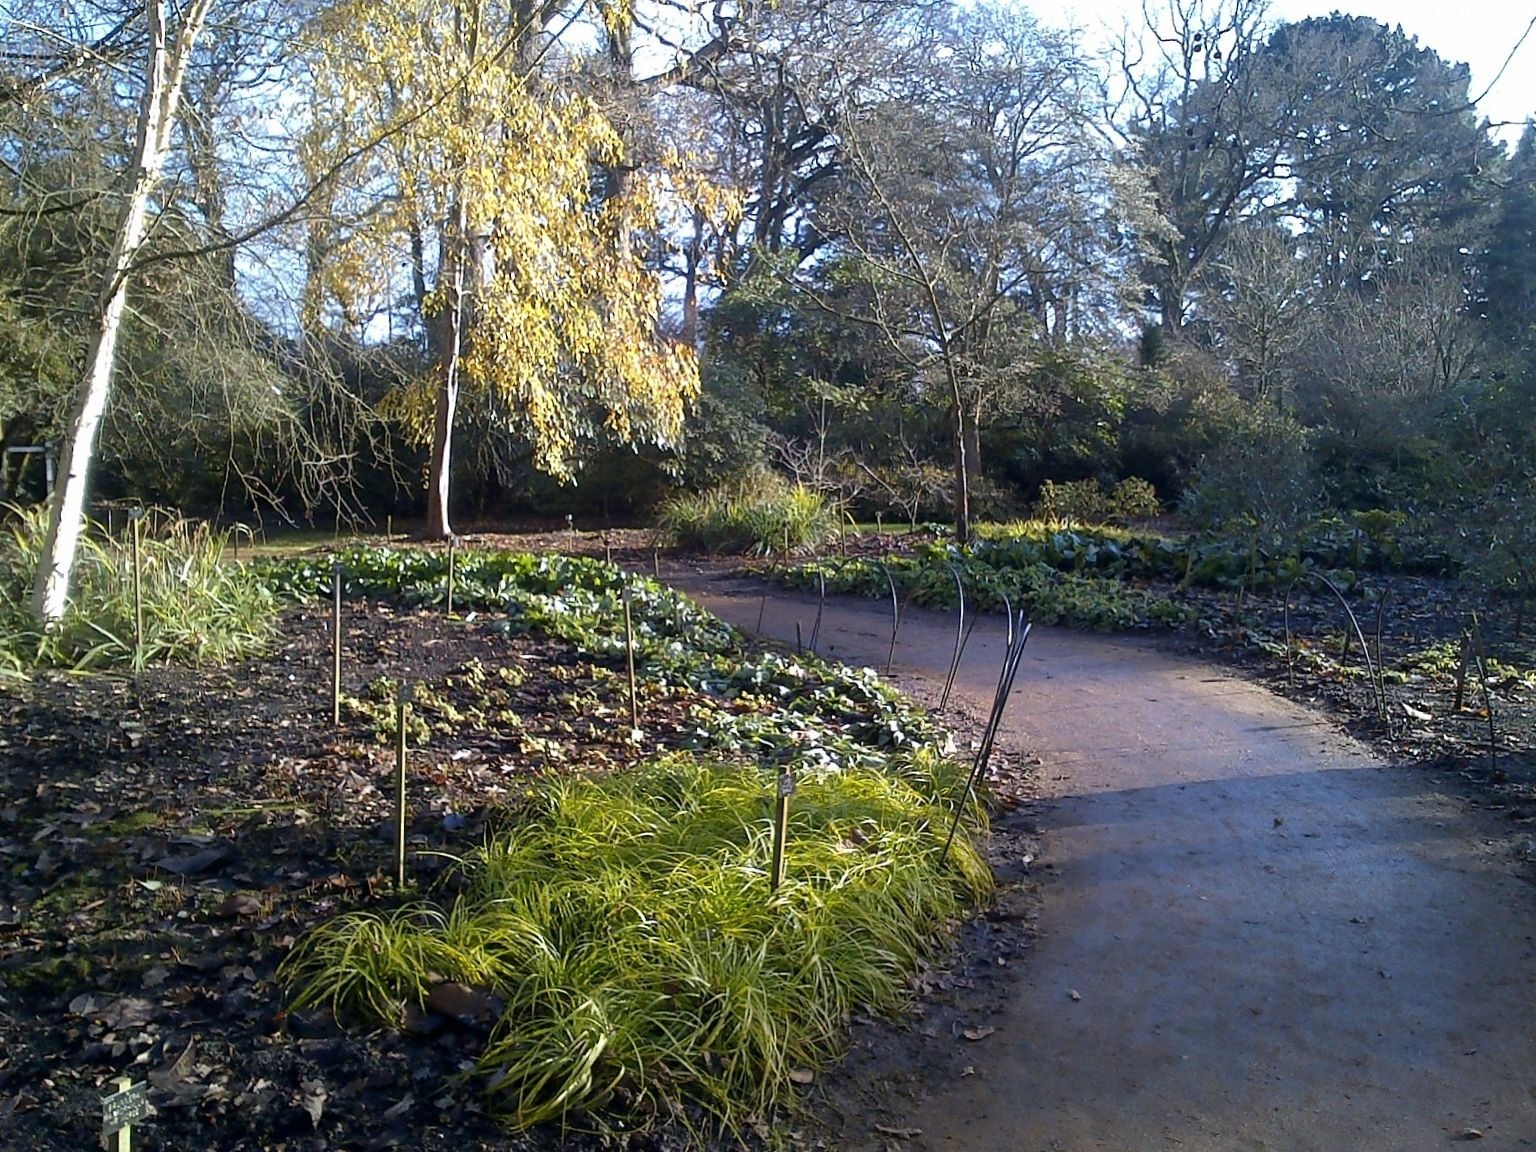 Path through gardens sunny day trees